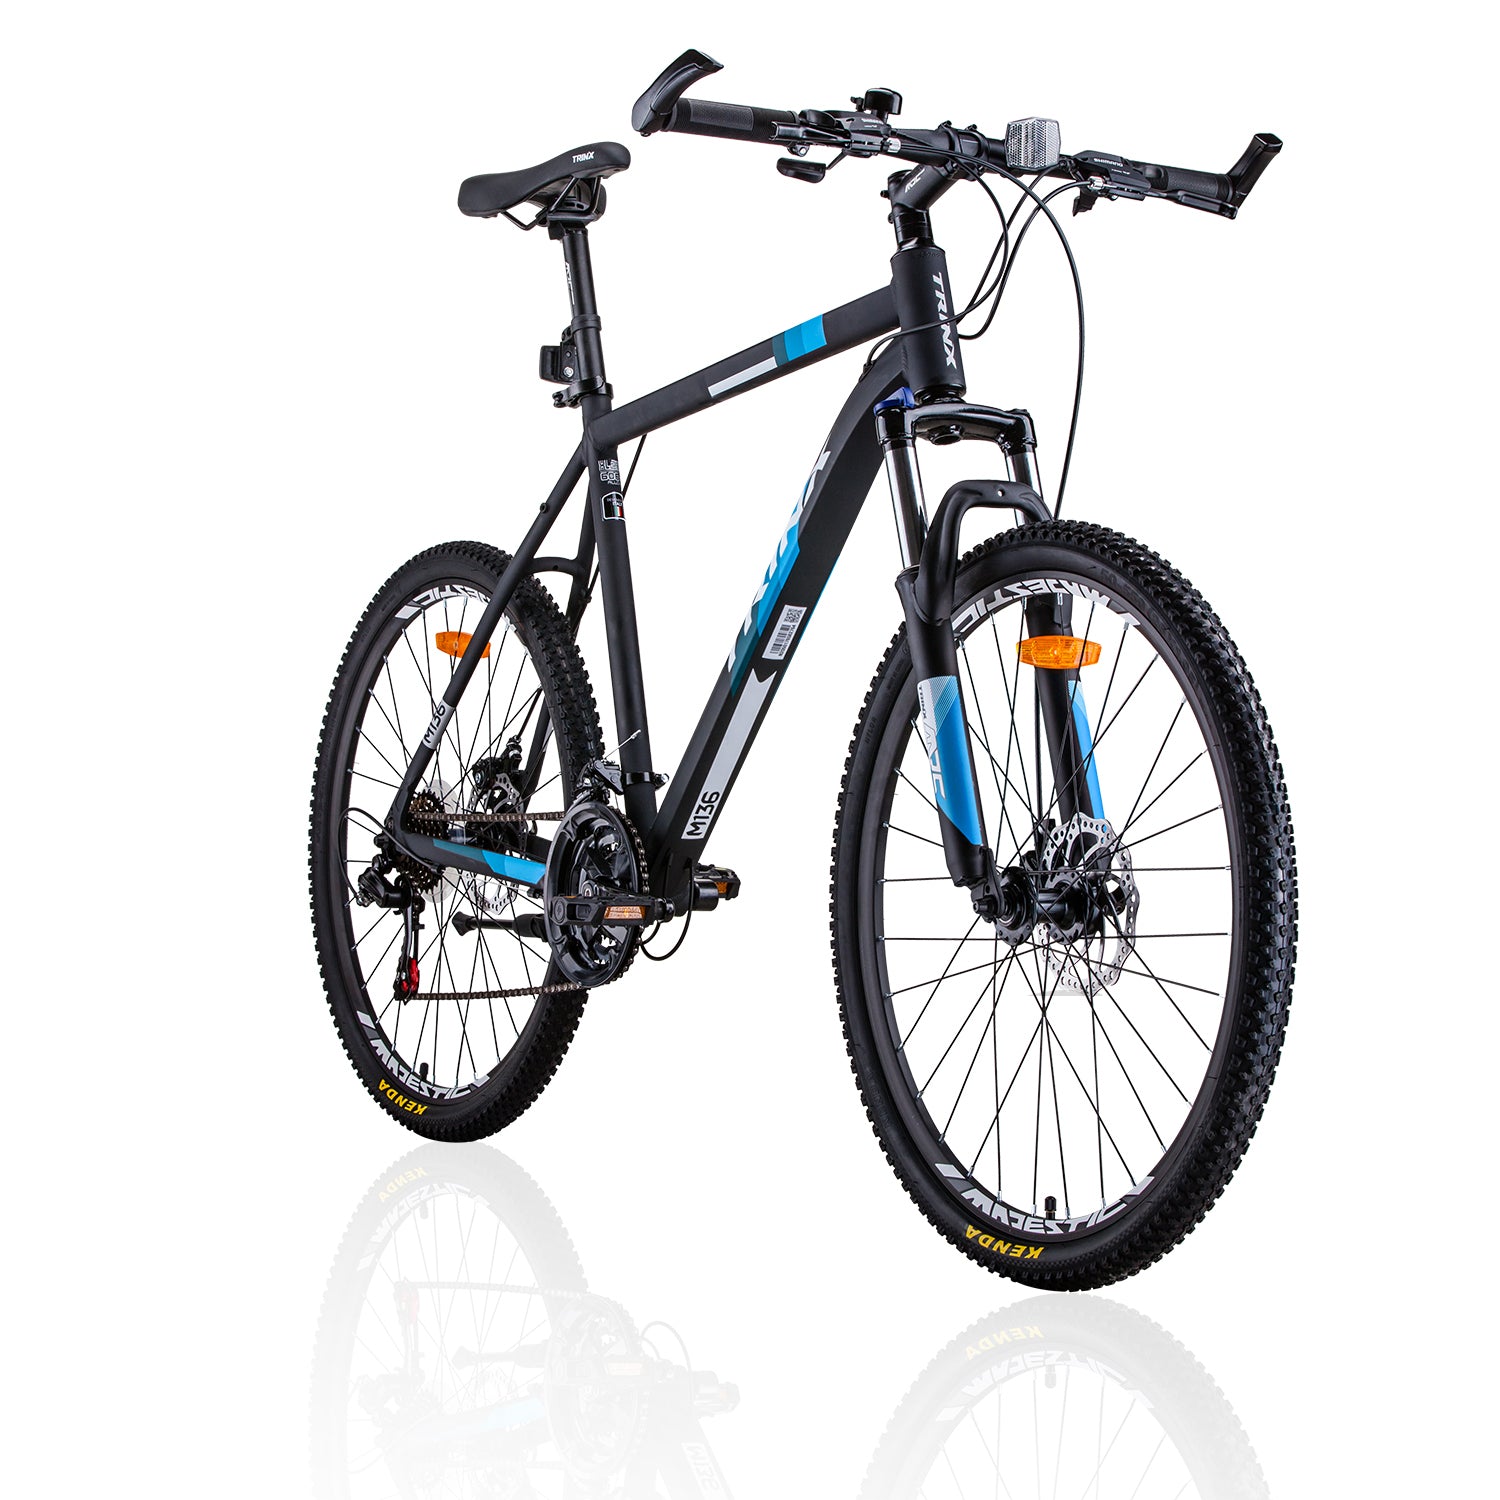 Trinx MTB Mens Mountain Bike 26 inch Shimano Gear 21-Speed [Colour: Matt Black White/Blue] [Size Of Frame: 17 inches]